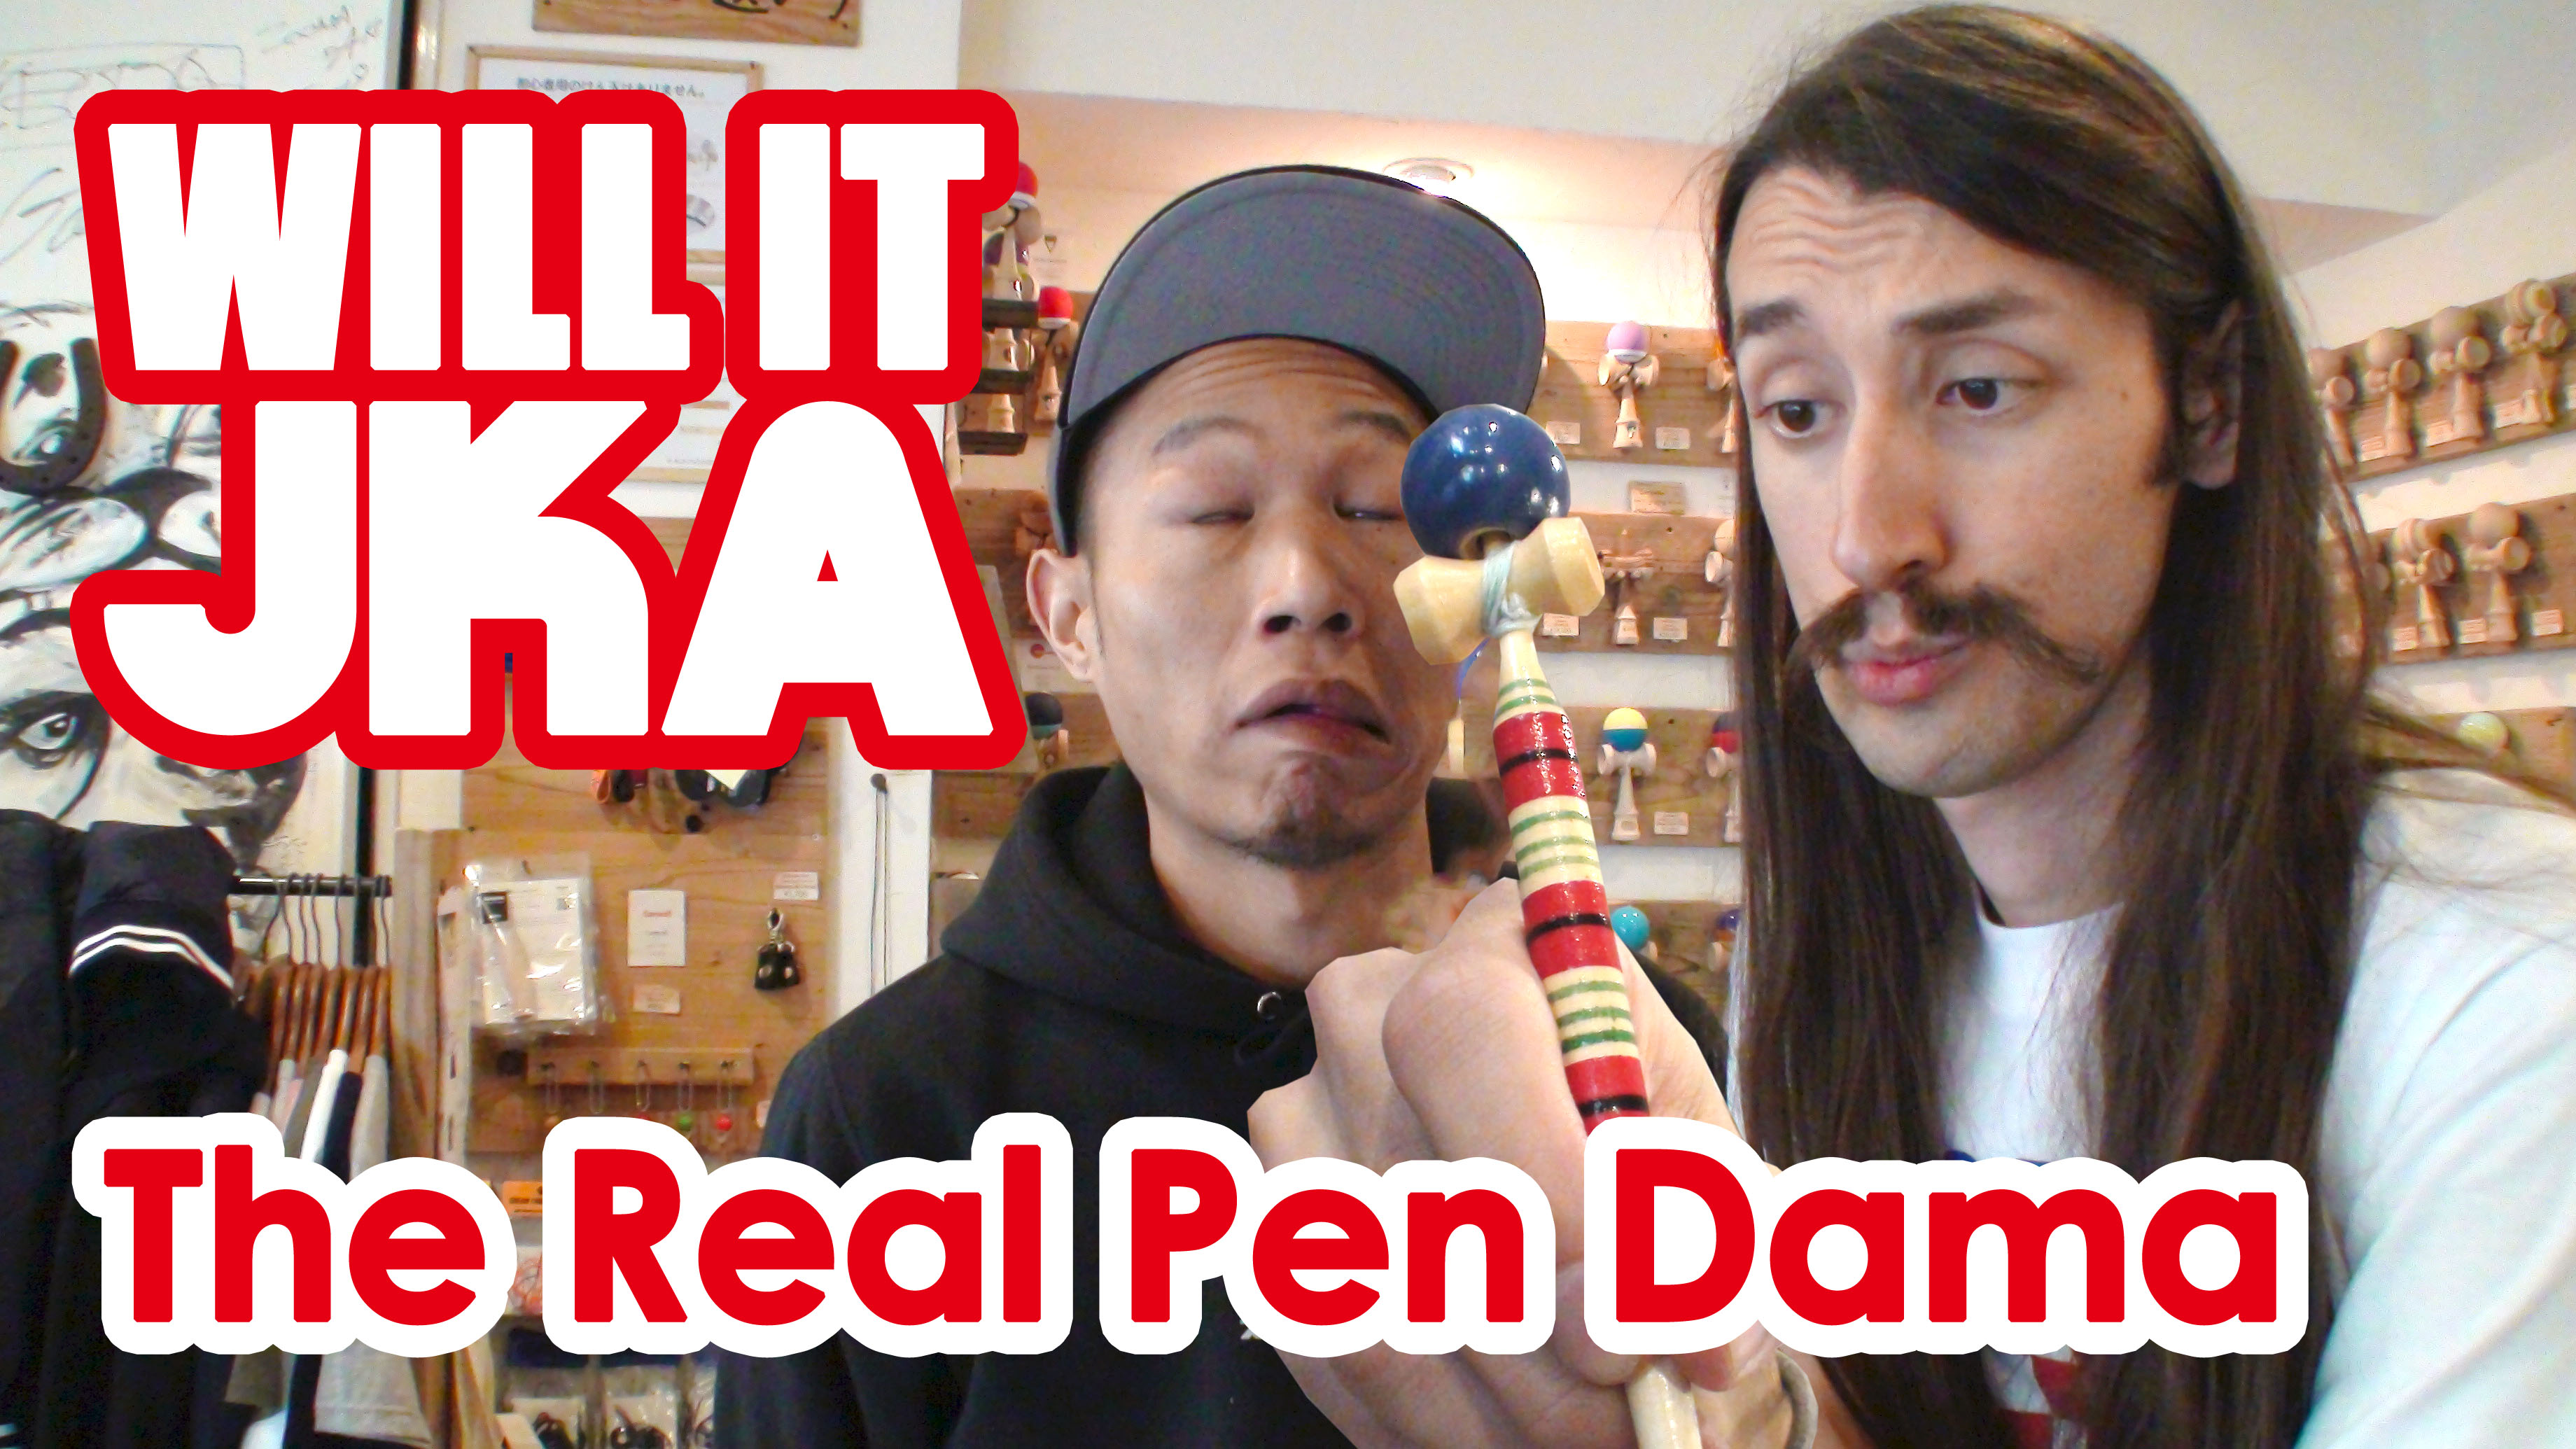 The Real Pen Dama - Will It JKA?